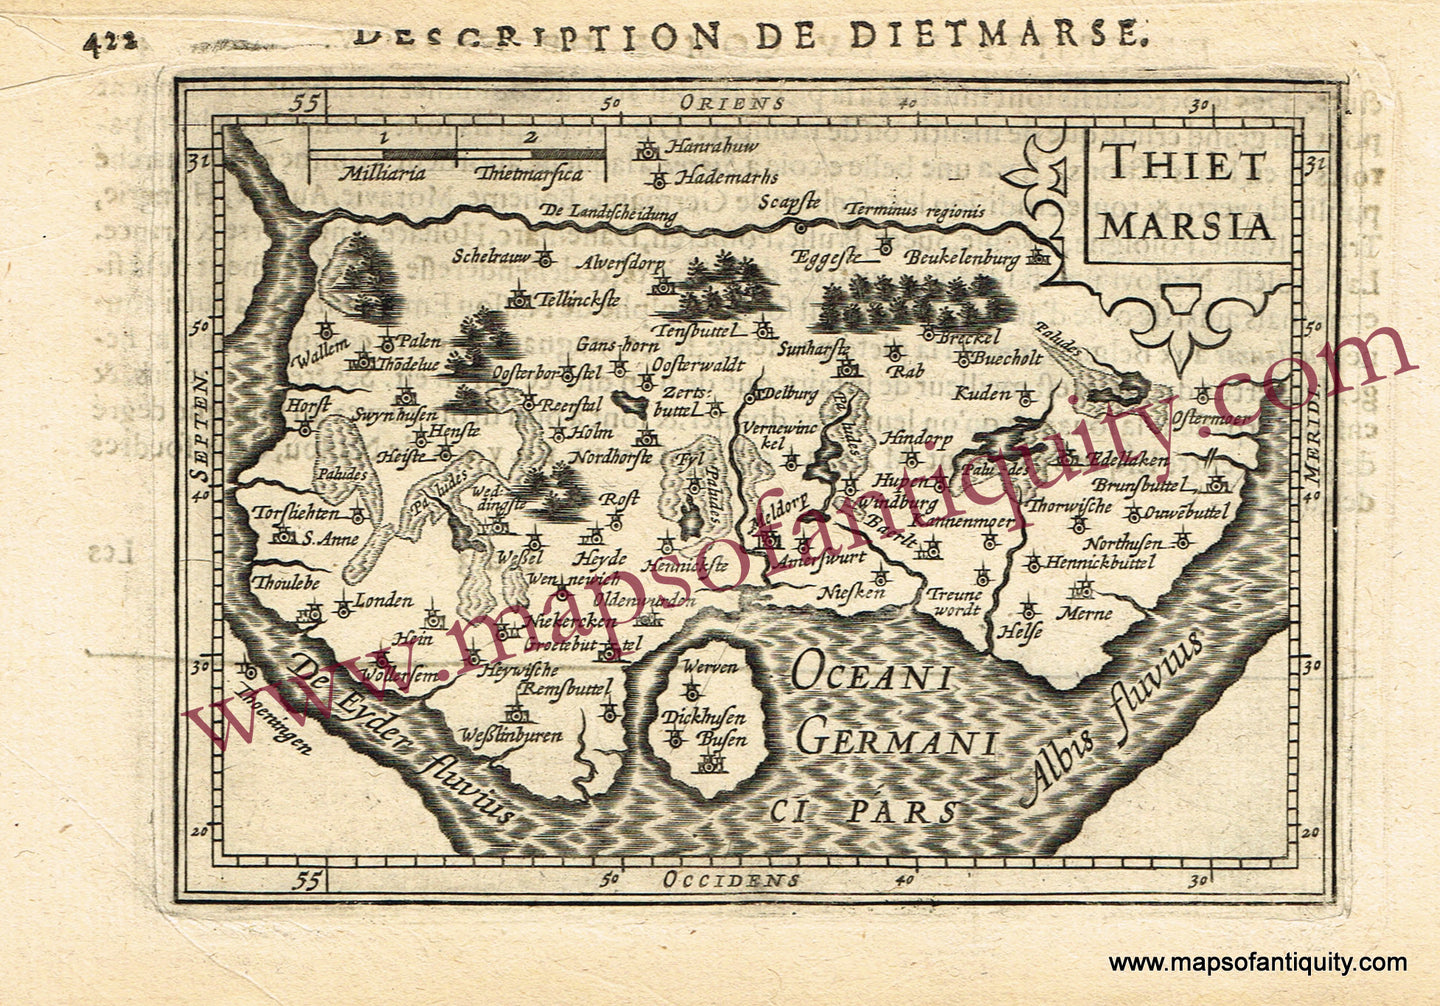 Antique-Uncolored-Map-Description-de-Dietmarse-or-Thiet-Marsia-Europe-Germany-c.-1550-Bertius-Maps-Of-Antiquity